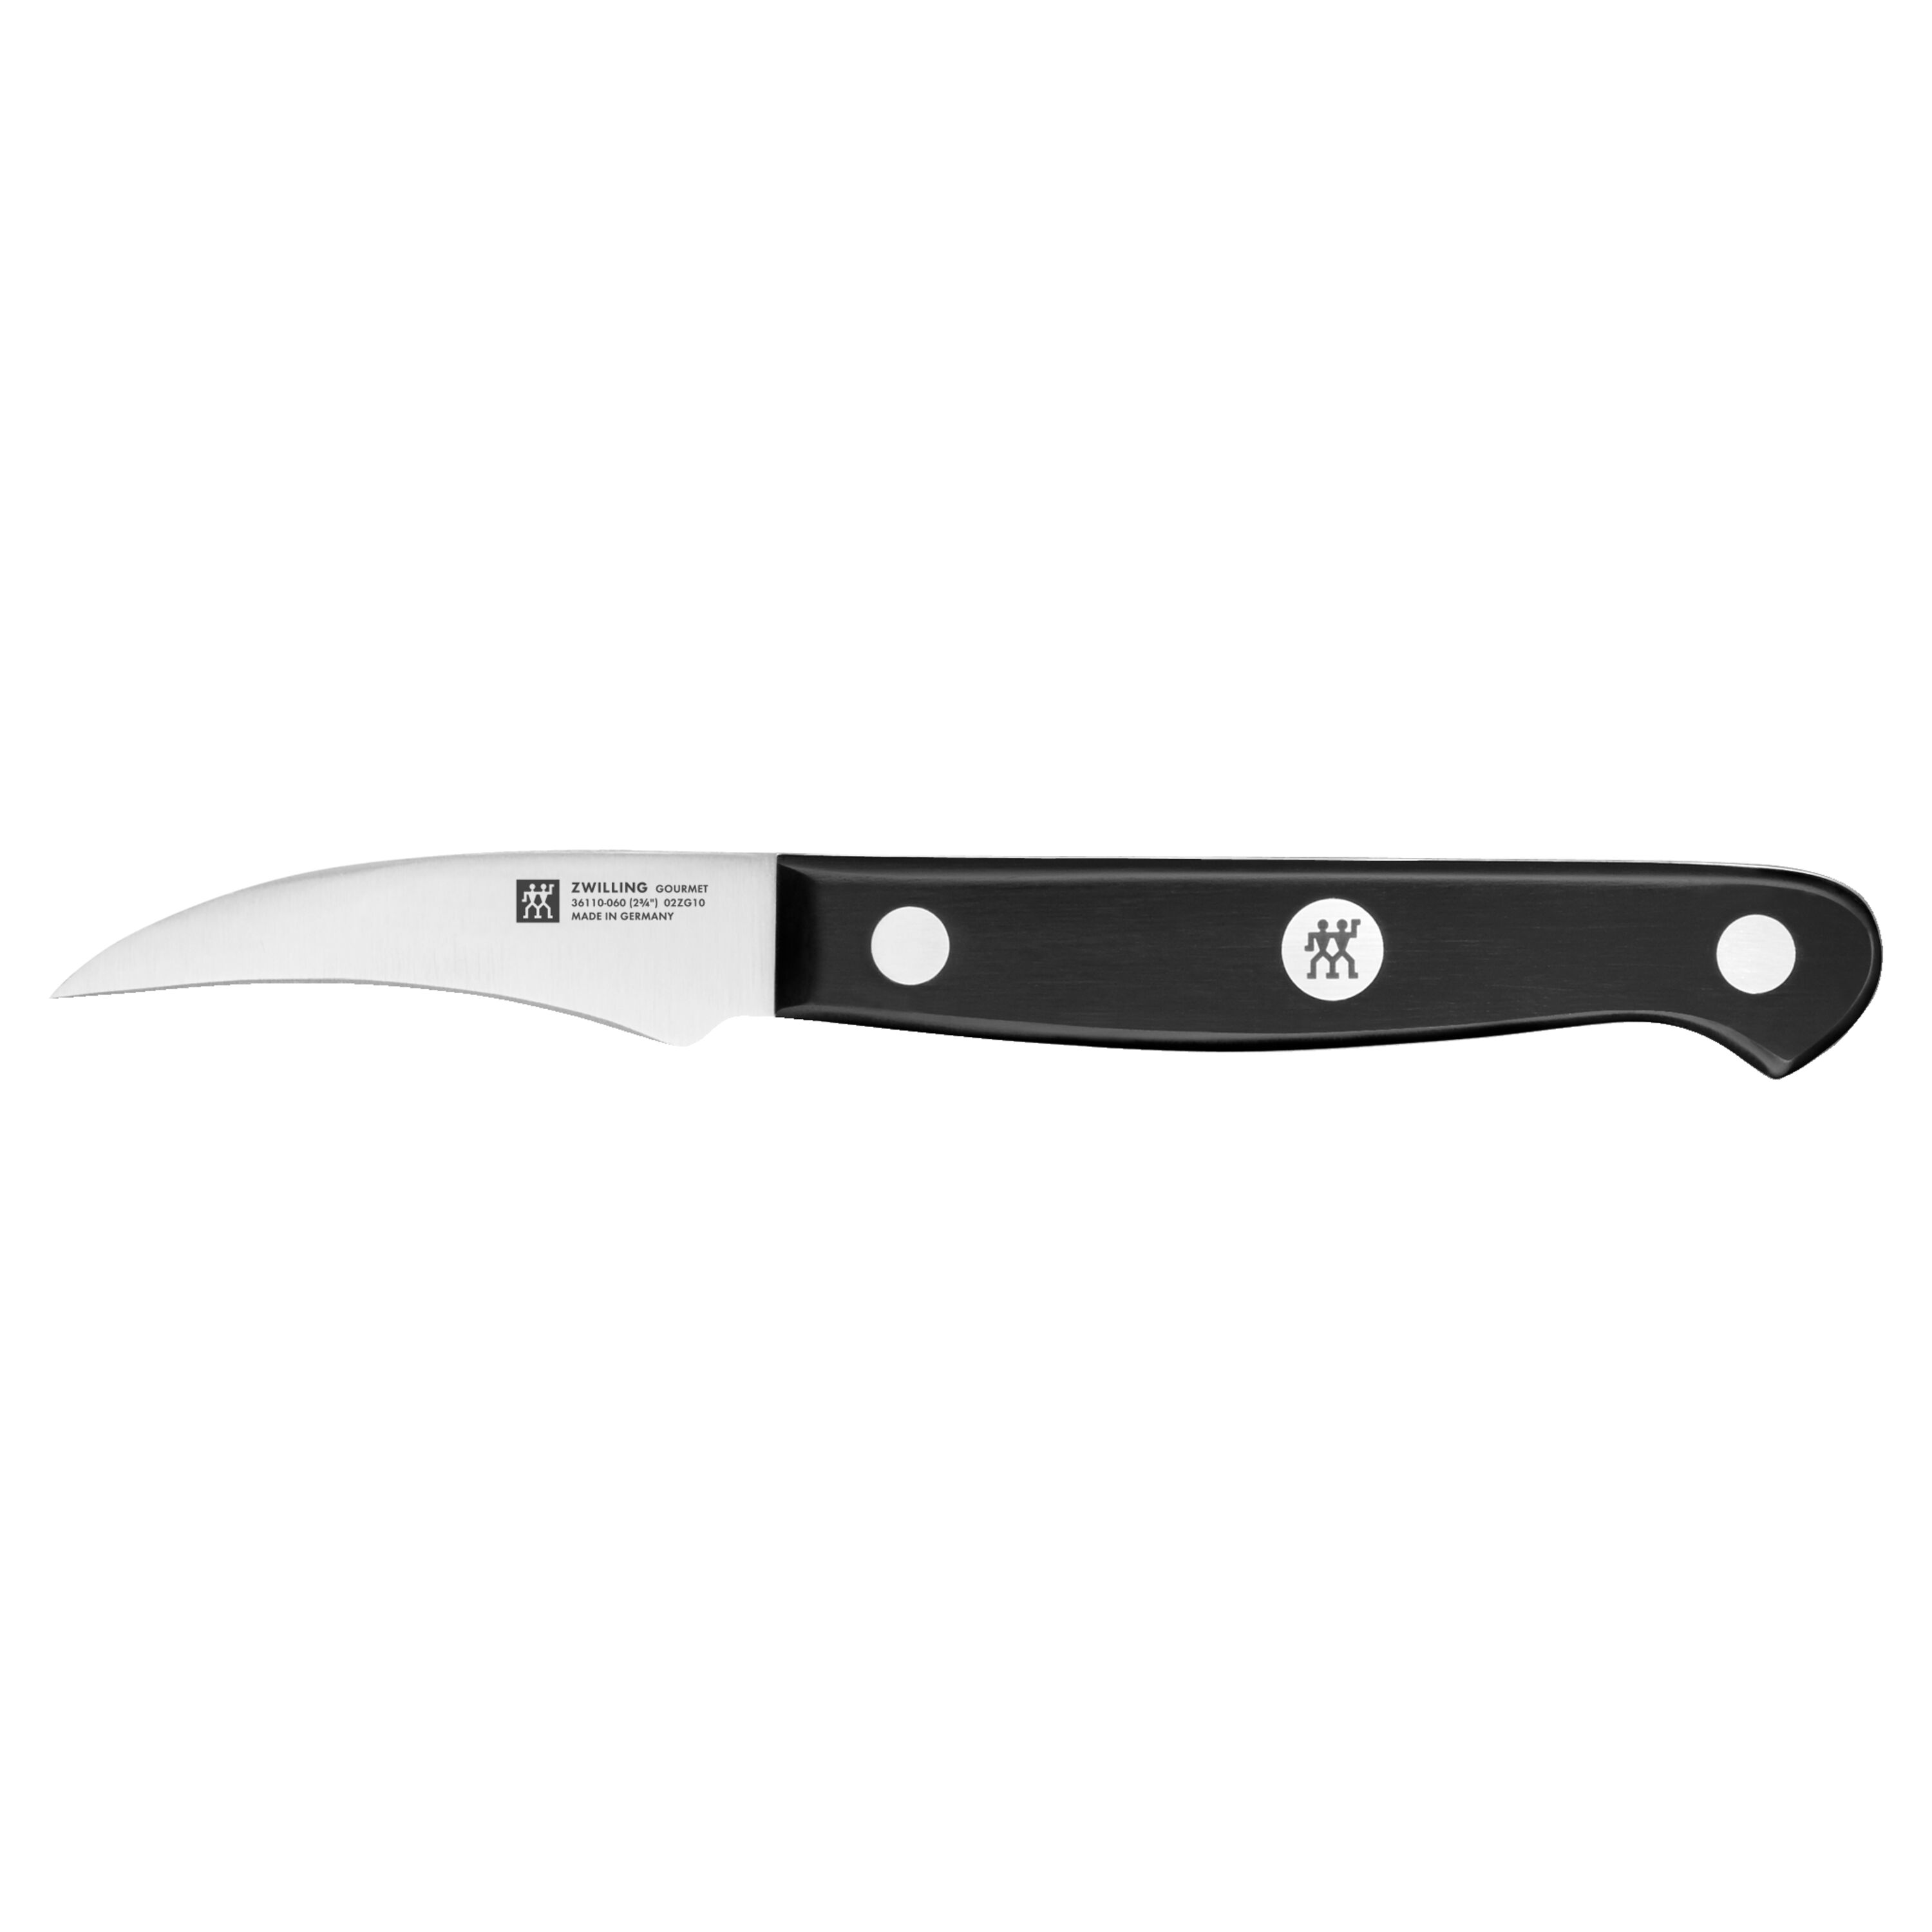  HENCKELS Graphite 20-pc Self-Sharpening Knife Set with Block,  Chef Knife, Paring Knife, Utility Knife, Bread Knife, Steak Knife, Black,  Stainless Steel : Everything Else